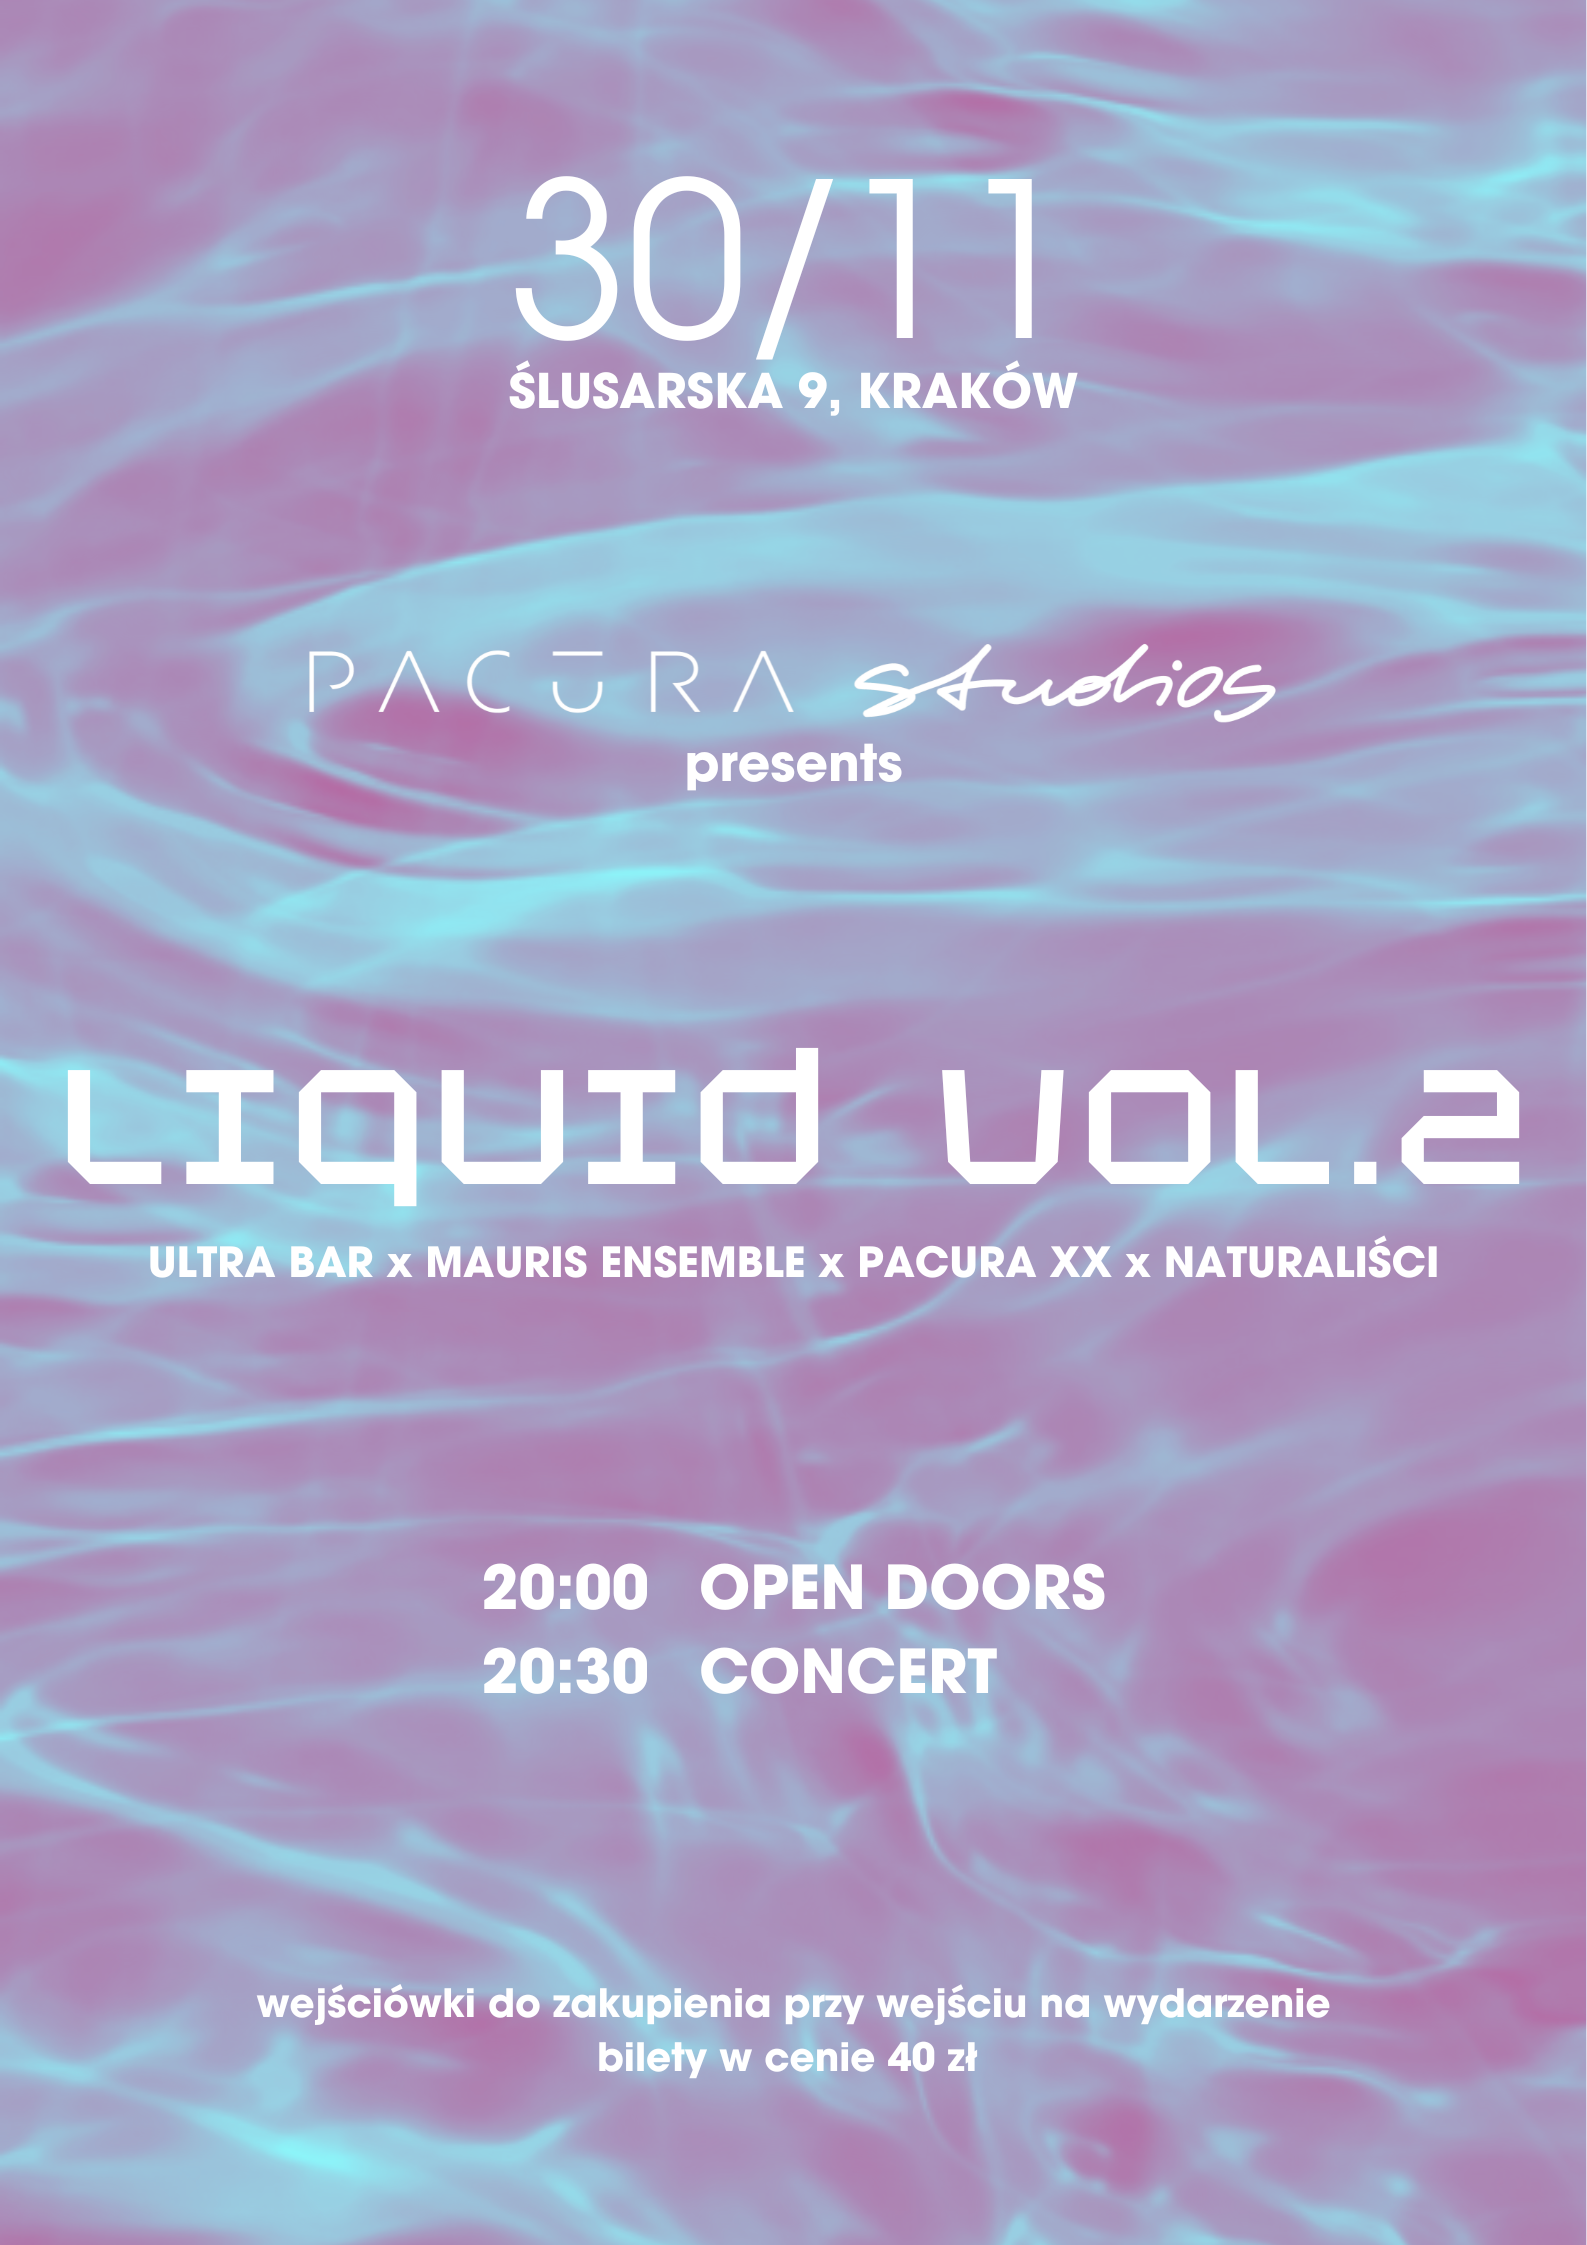 liquid kopia - LIQUID vol. 2 - Ultra Bar, Pacura Studios, Naturaliści, Mauris Ensemble, PACURA XX - Koncert muzyki klasycznej i elektronicznej oraz degustacja wina